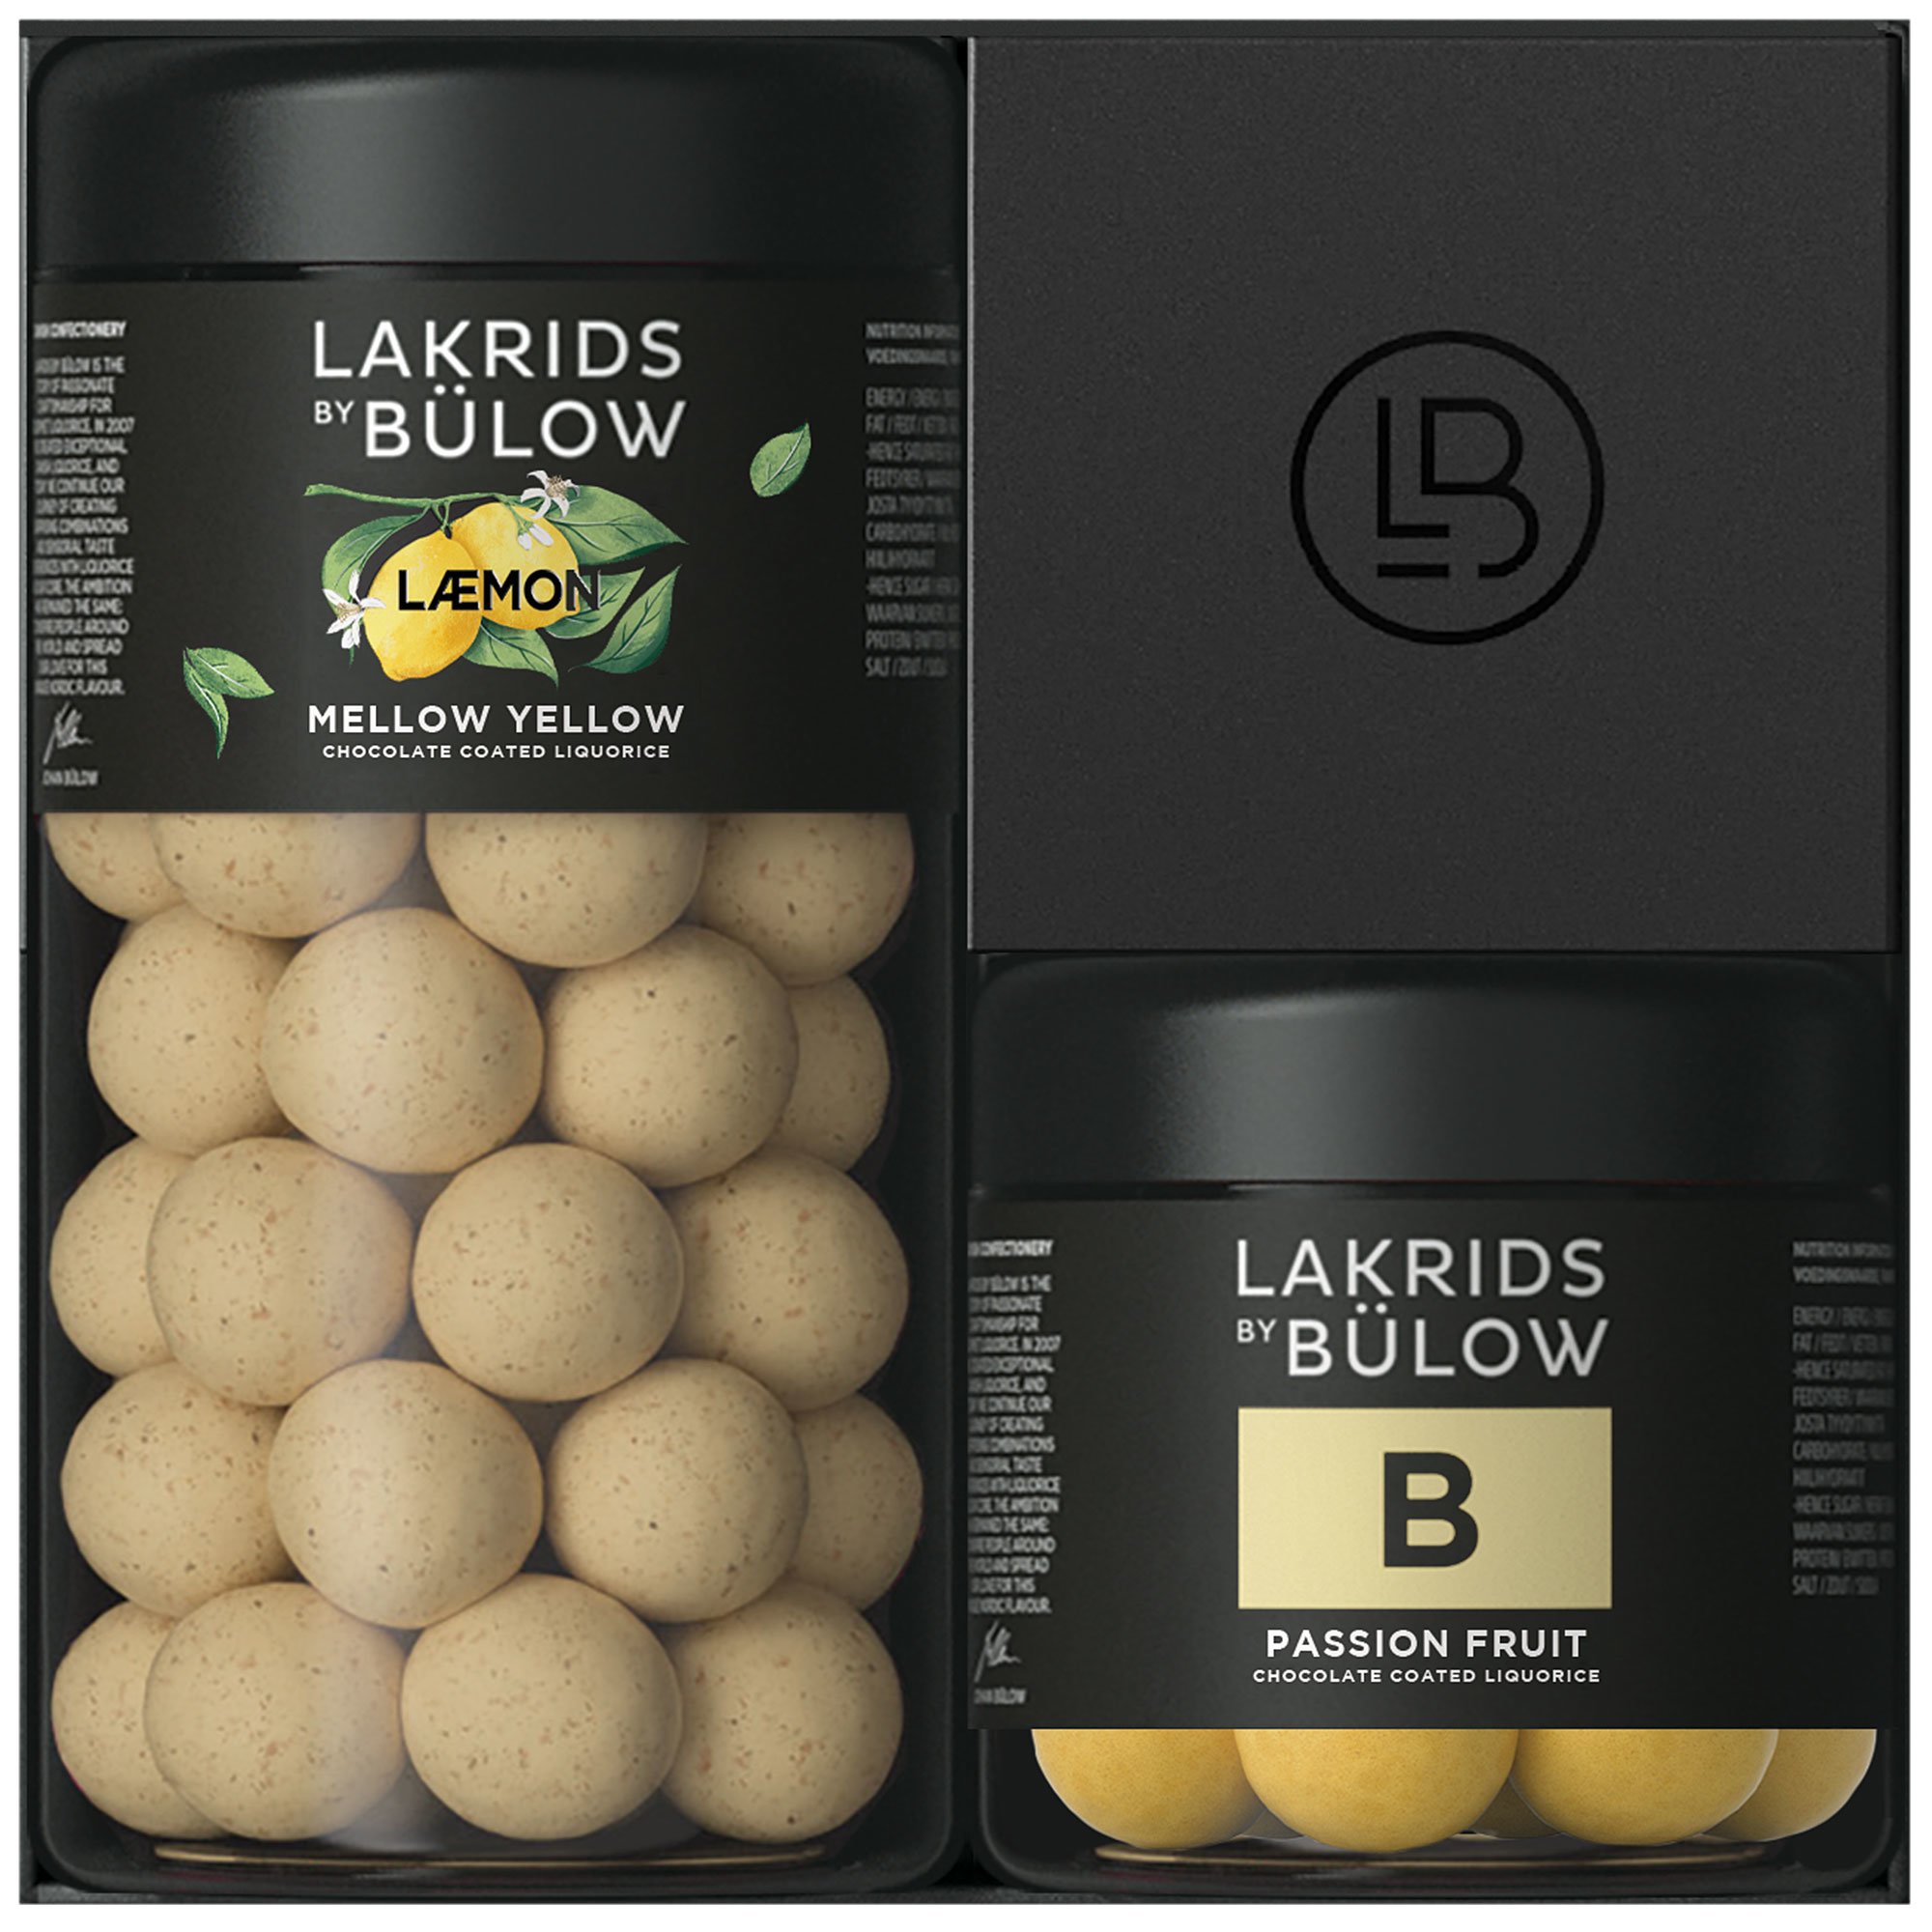 Lakrids by Bülow Black Box Regular & Small Mellow Yellow Lemon & B Passion Fruit